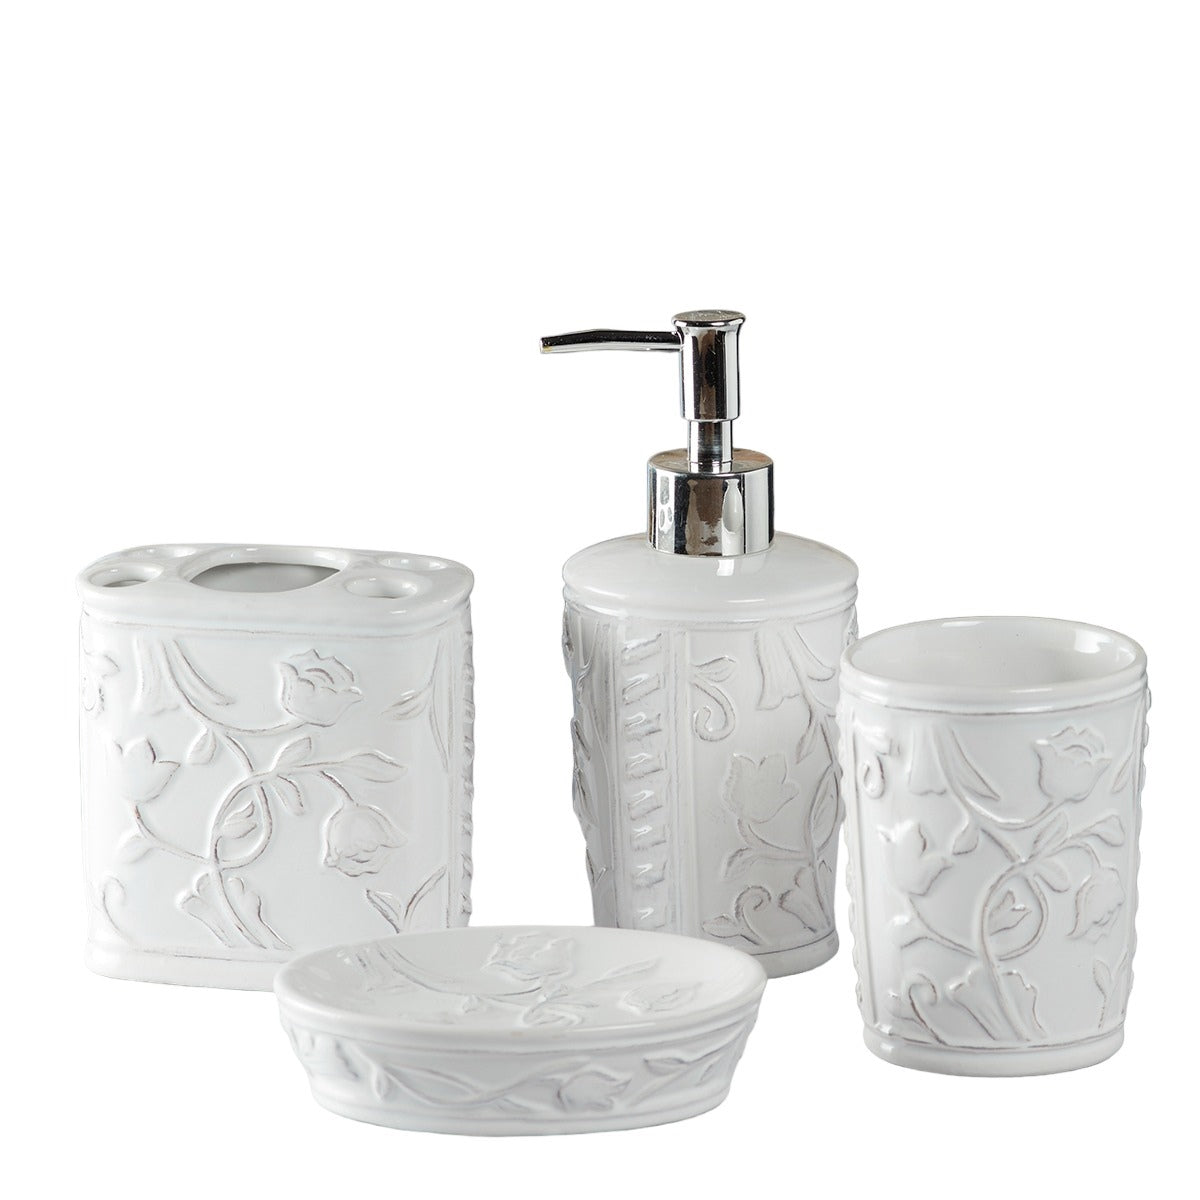 Ceramic Bathroom Accessories Set of 4 Bath Set with Soap Dispenser (9637)